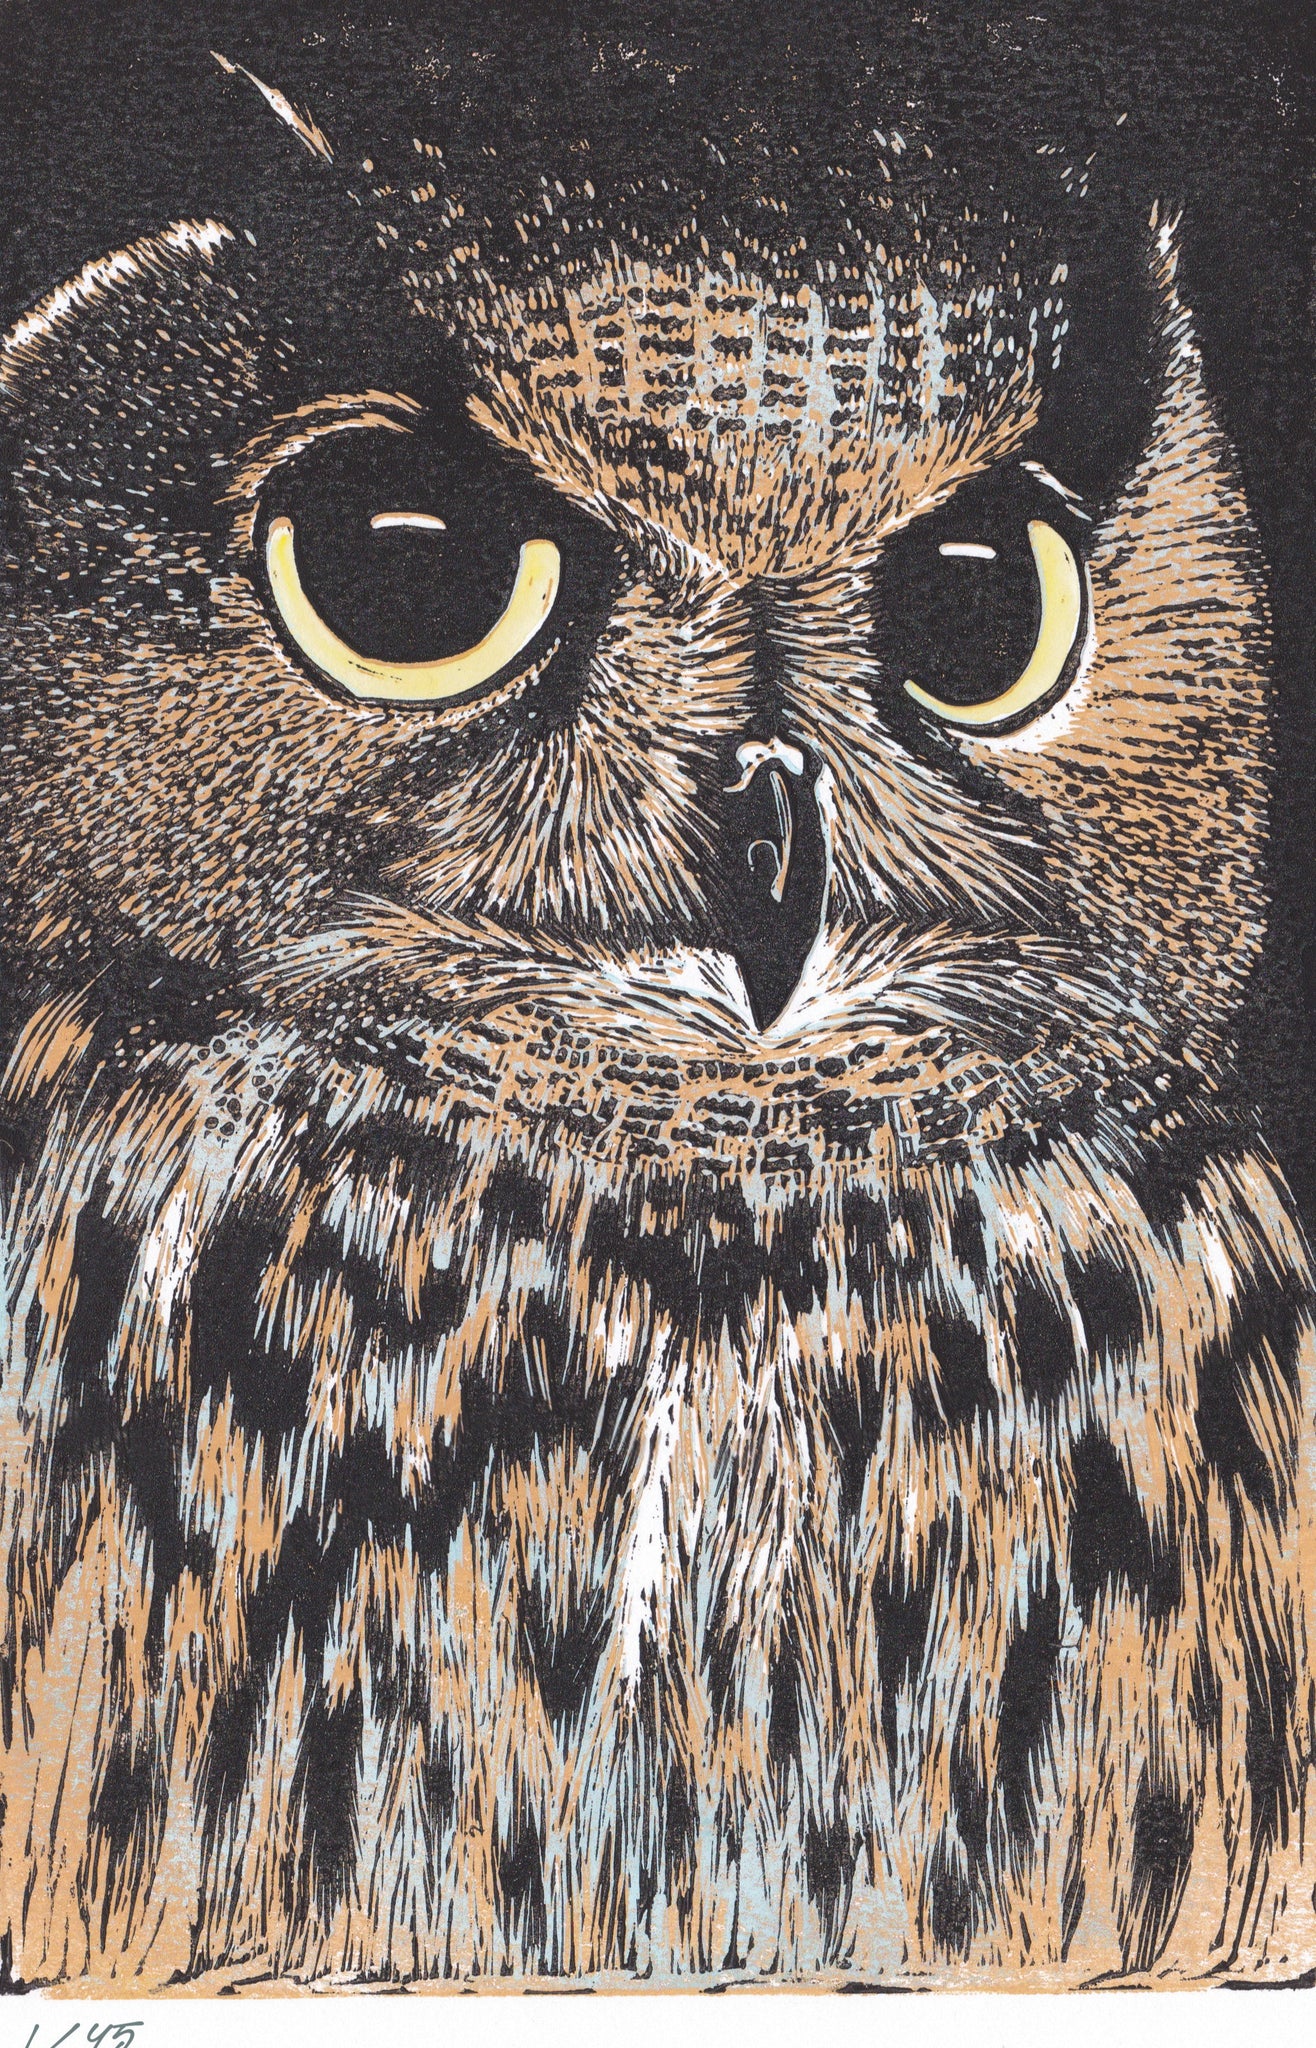 Owl 1/45